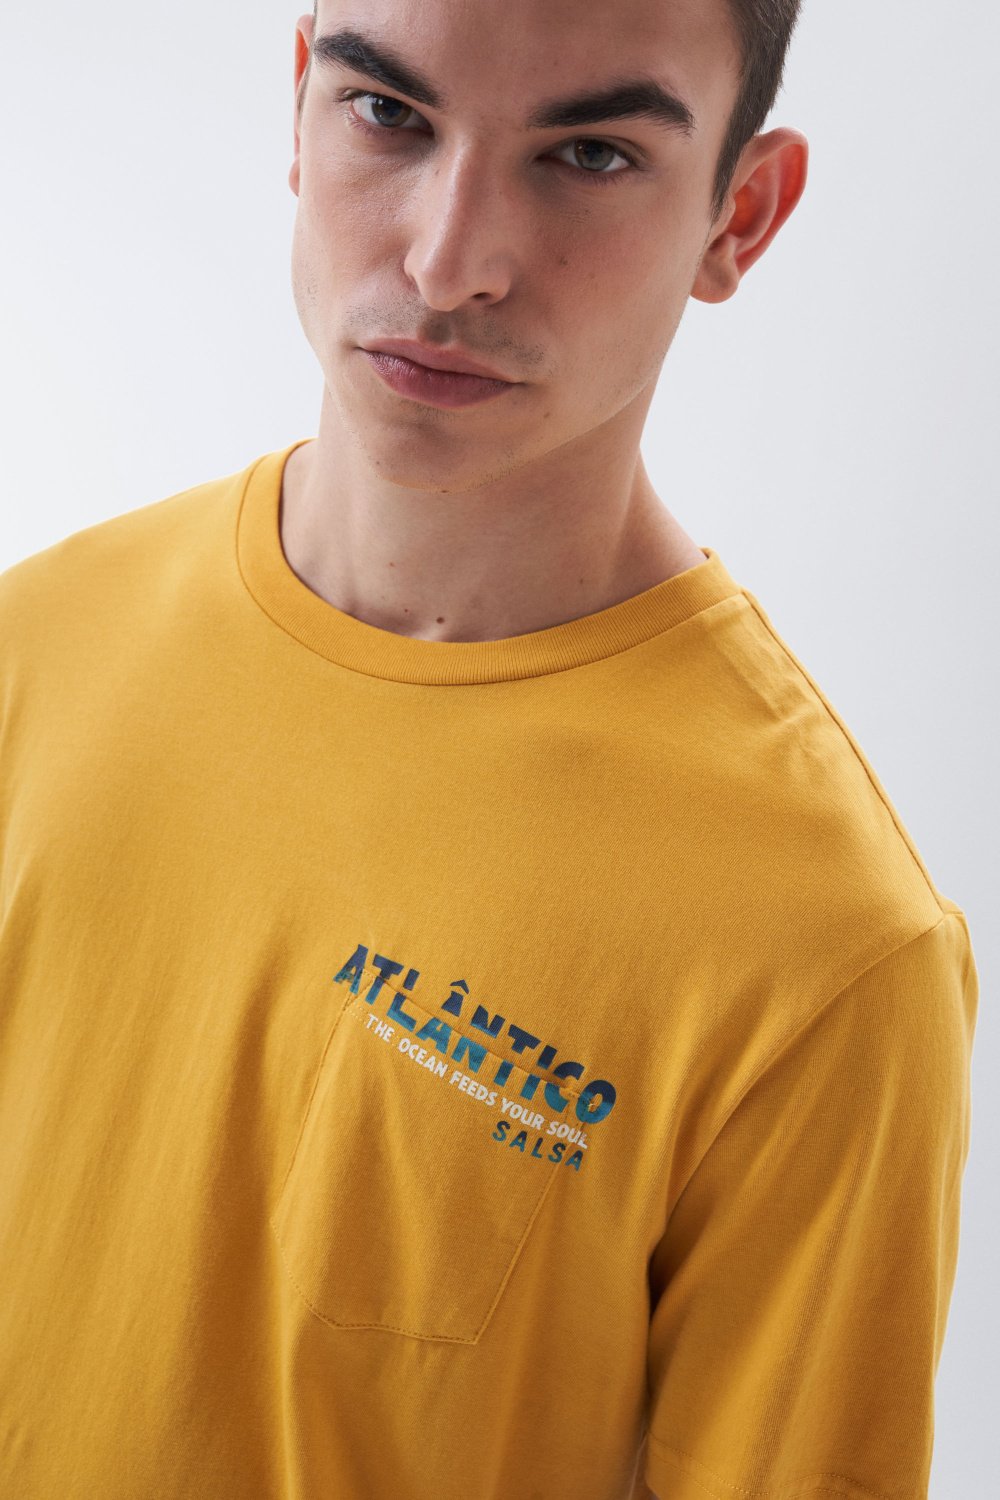 Camiseta grfica Atlntico - Salsa